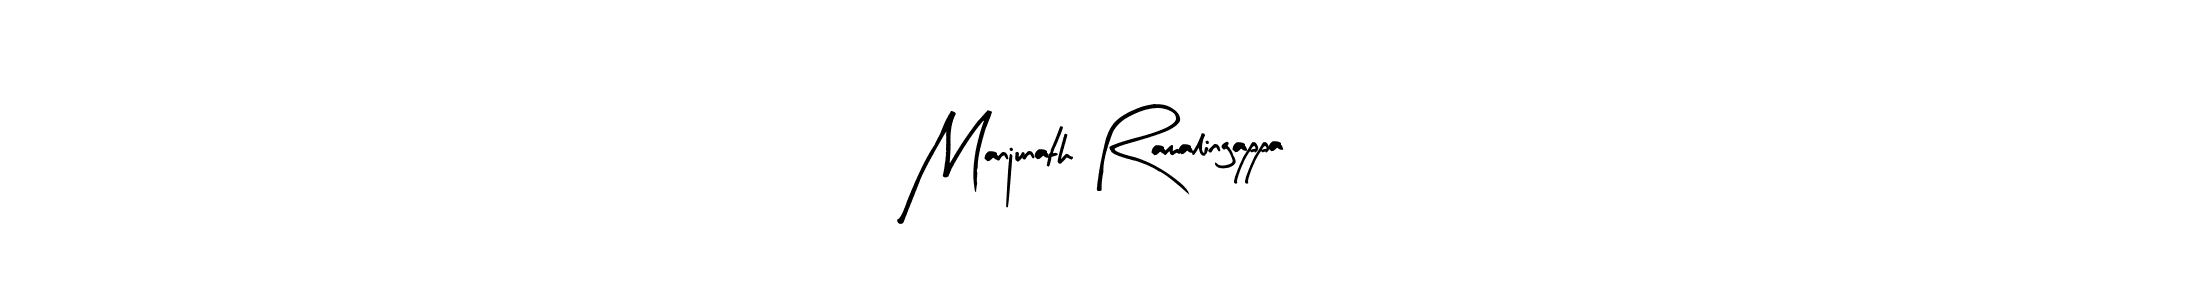 How to Draw Manjunath Ramalingappa signature style? Arty Signature is a latest design signature styles for name Manjunath Ramalingappa. Manjunath Ramalingappa signature style 8 images and pictures png